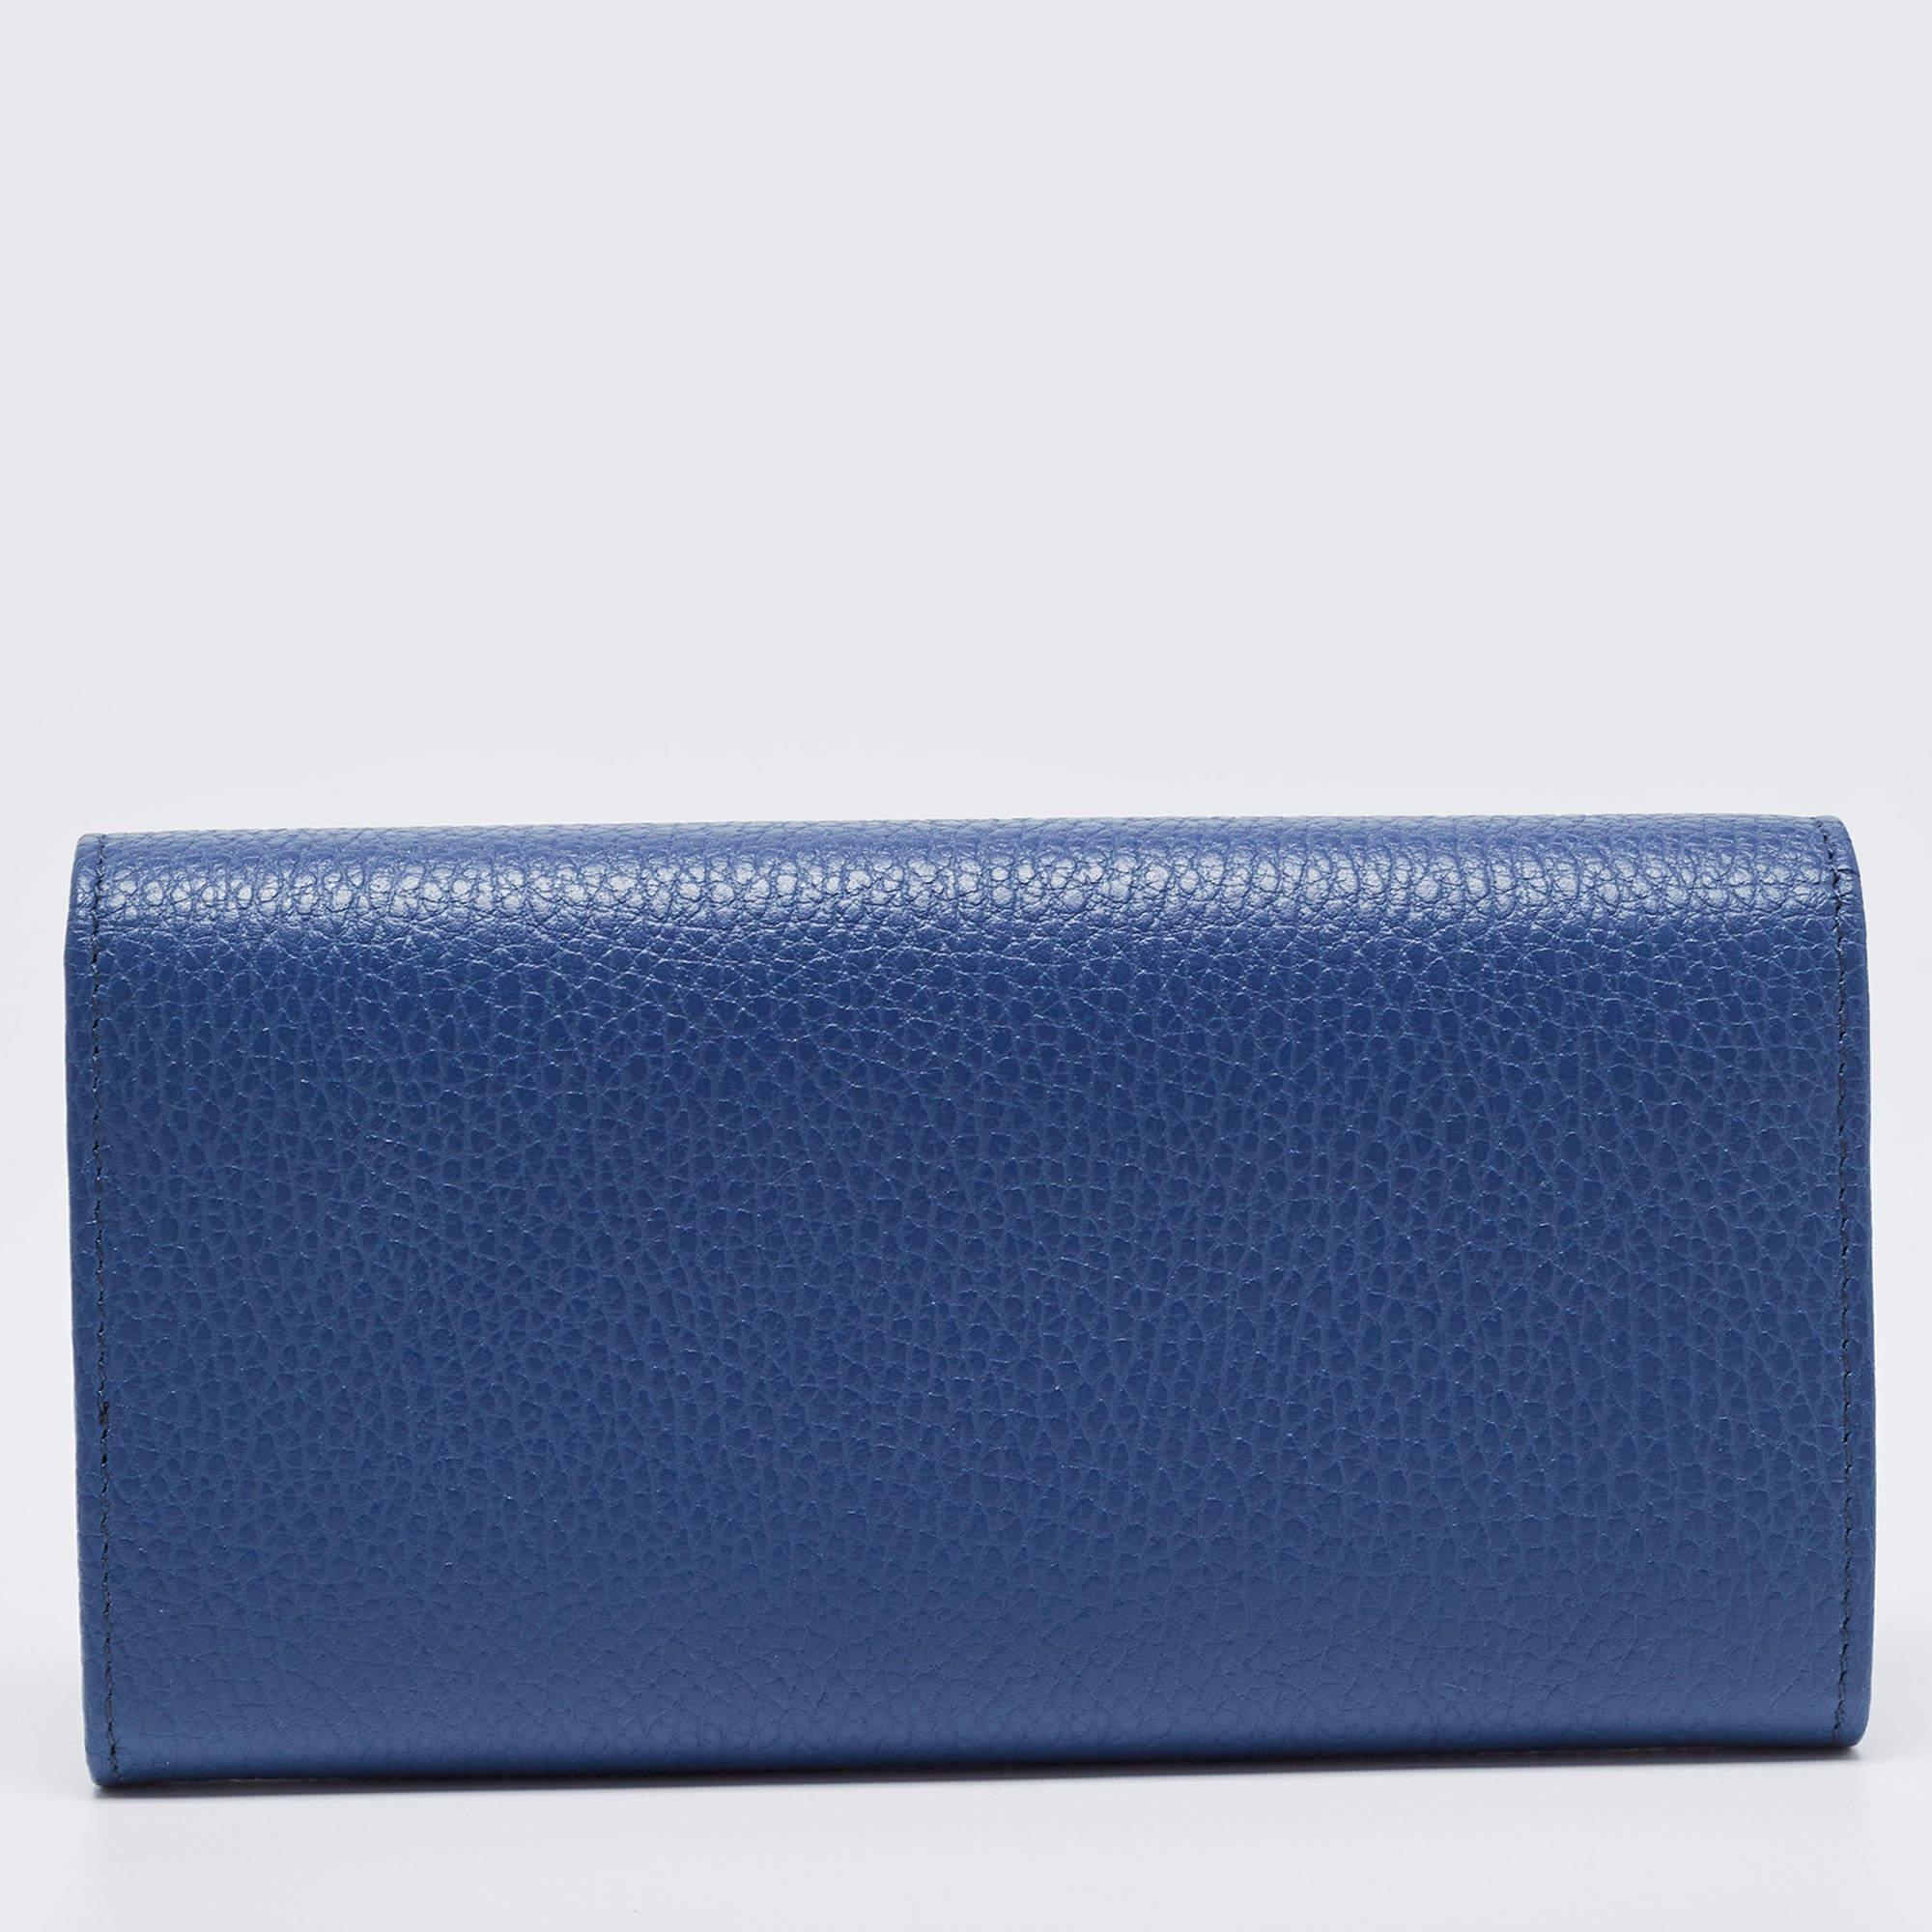 Gucci Blue Leather Interlocking G Continental Wallet 2